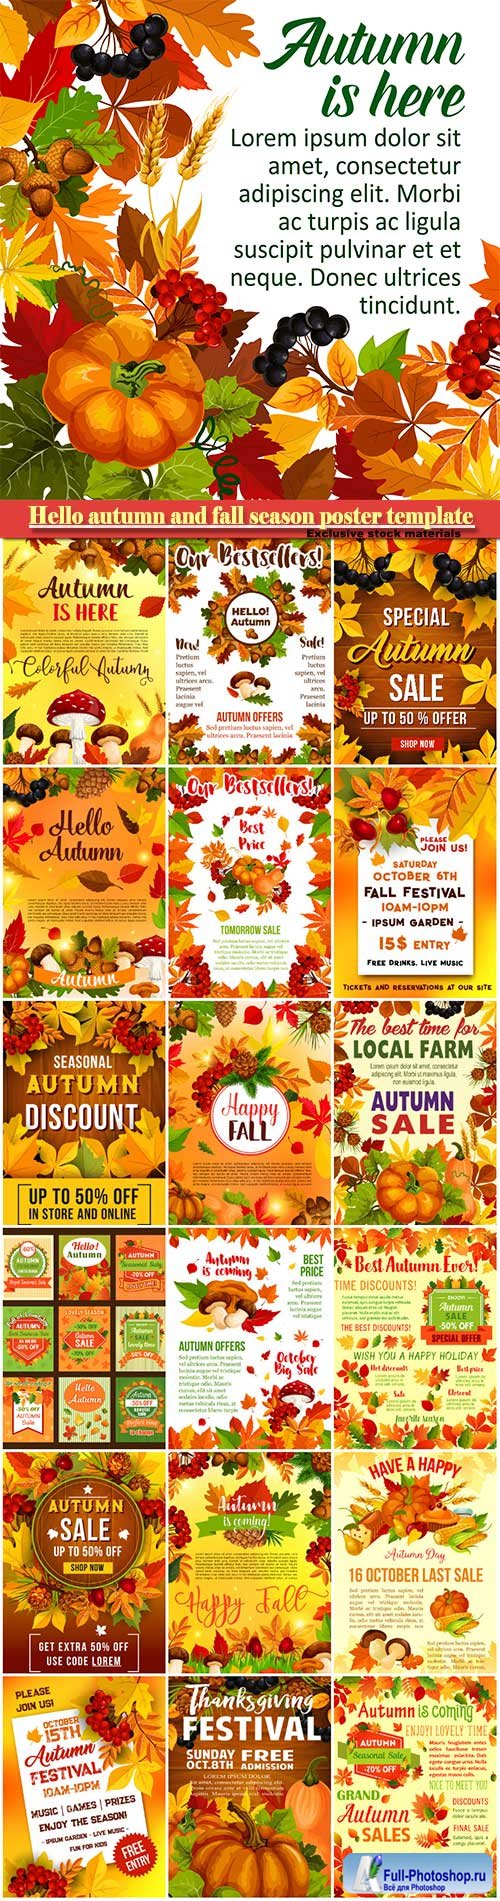 Hello autumn and fall season poster template, thanksgiving day design